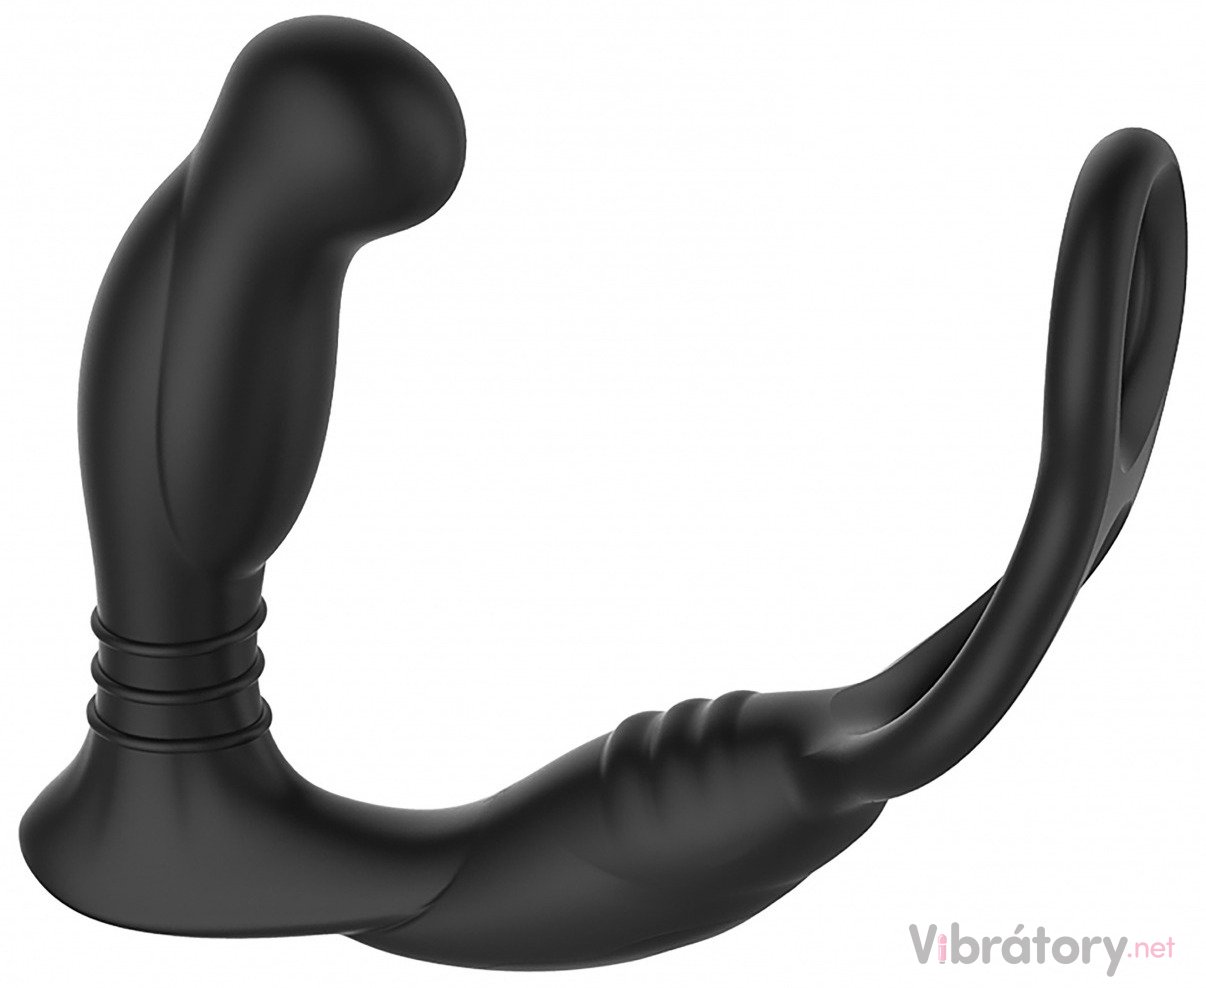 Vibrátor na prostatu a hráz s kroužky na penis a varlata Nexus Simul8